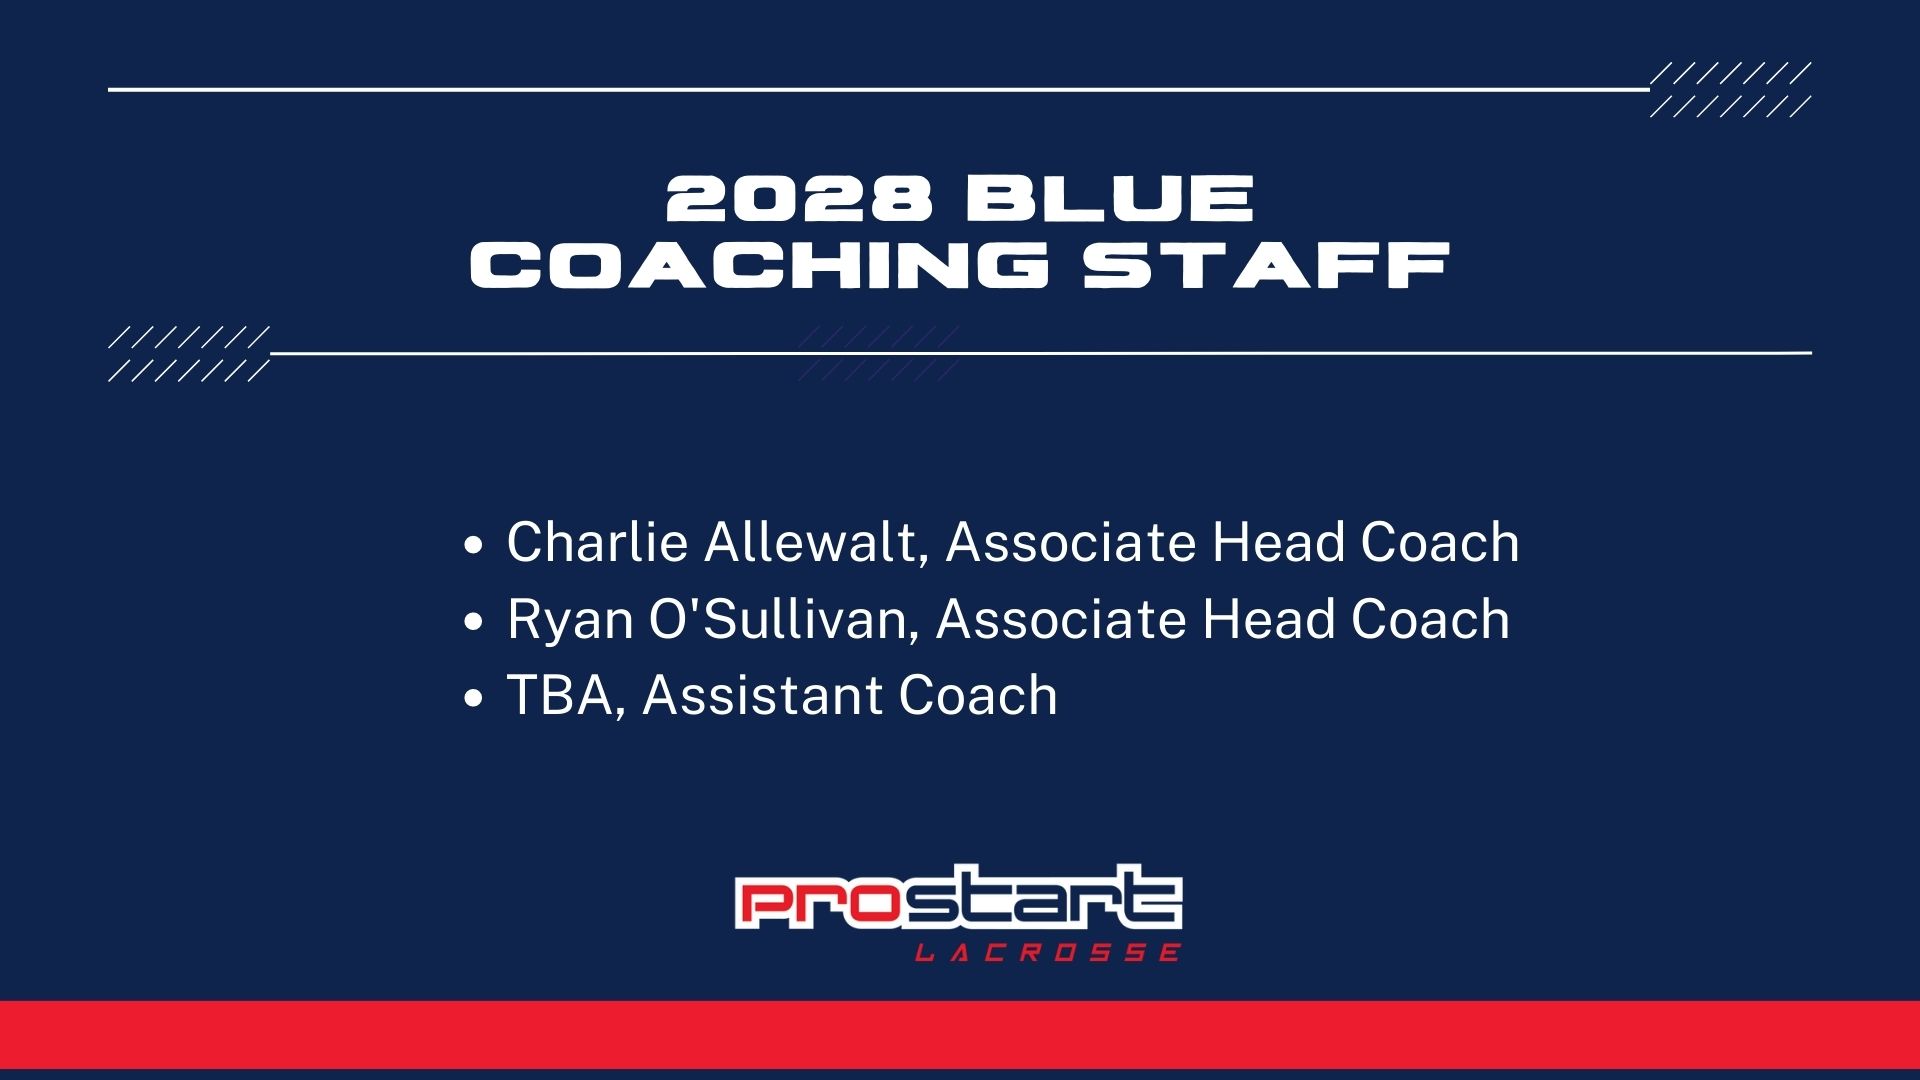 2028 Blue Coaching Staff